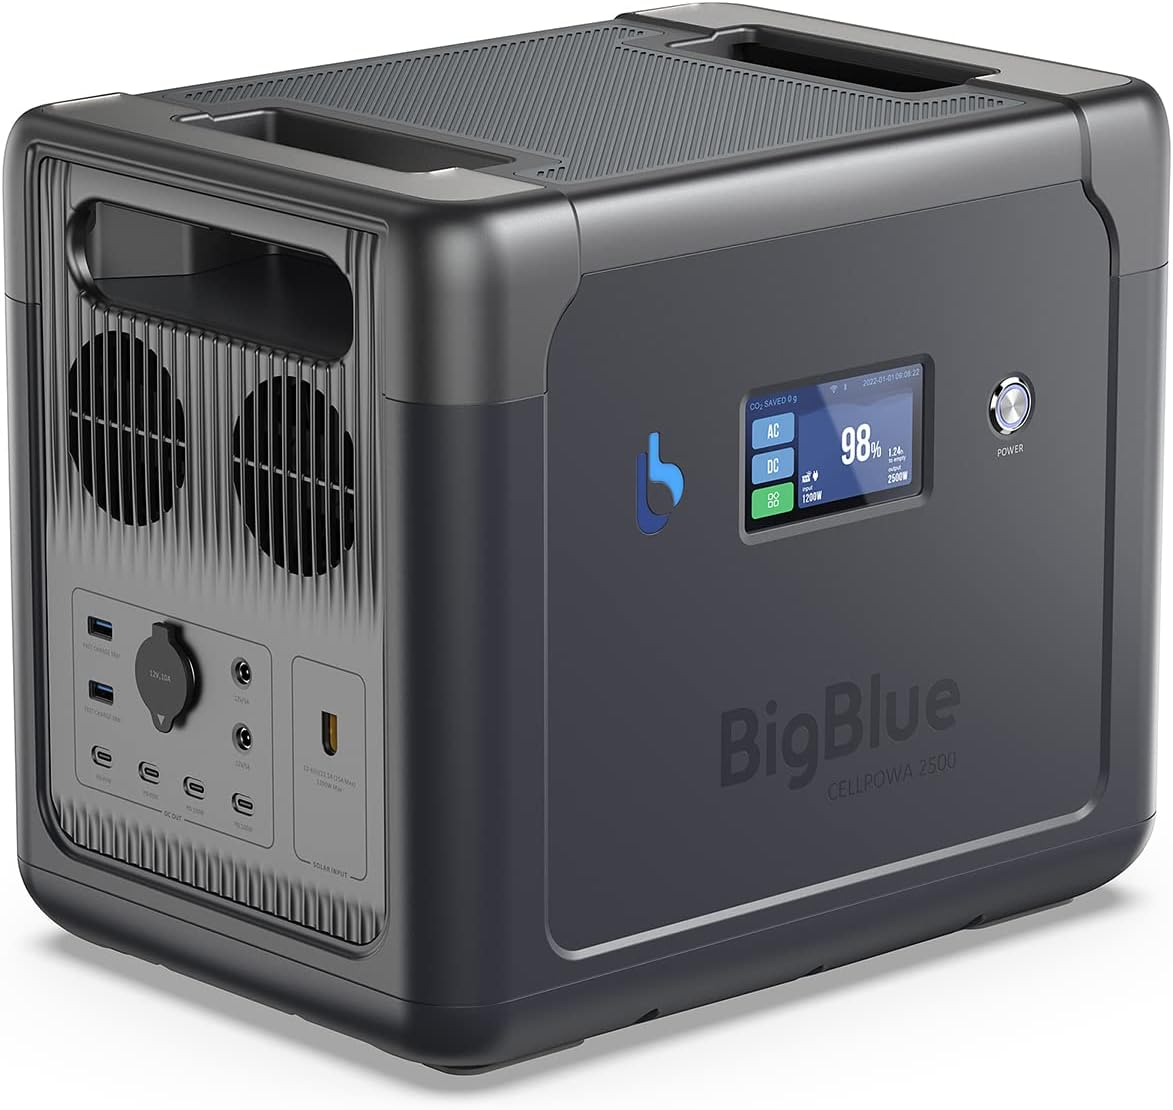 BigBlue |[^ud537.6Wh/ACo600Wg _S`ECIdr36%offE 37981~|CgzzI